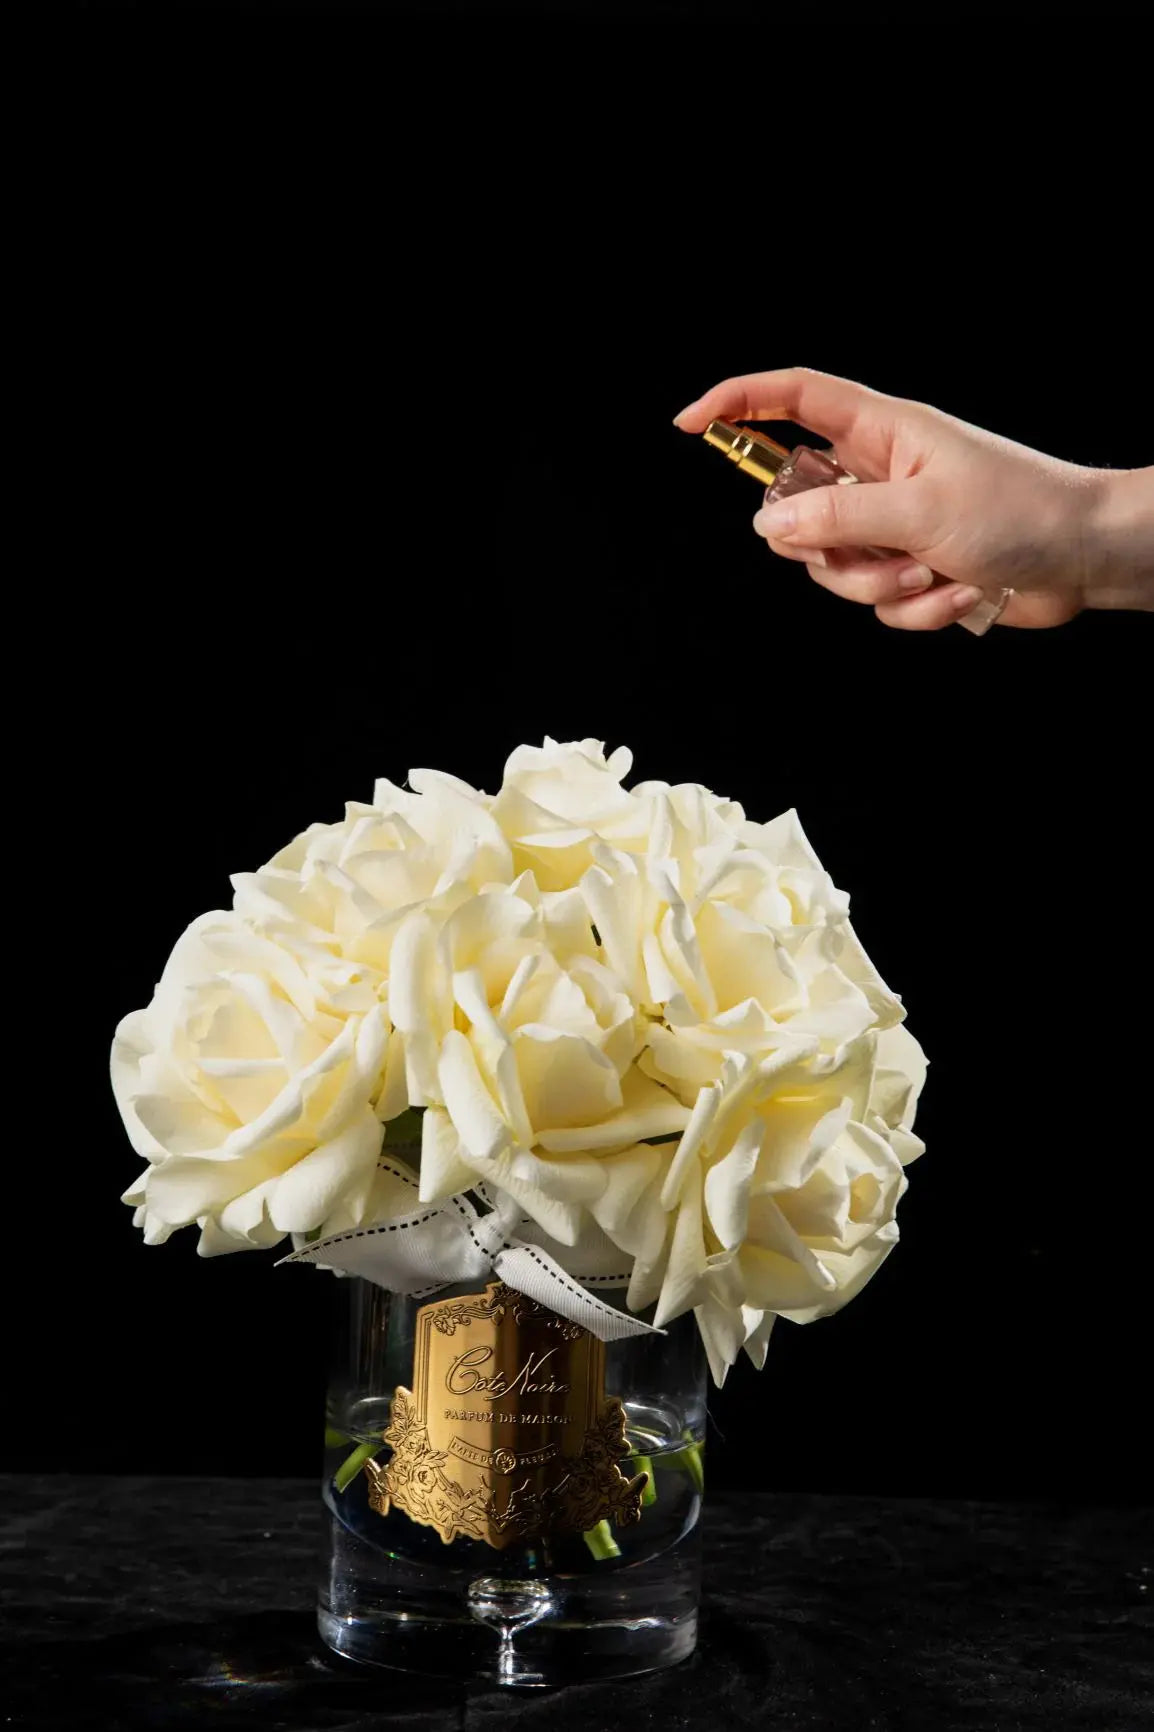 Grand Bouquet Champagne Gold Badge - Burgundy Box - LTW05 -  Cote Noire -  Armani Gallery